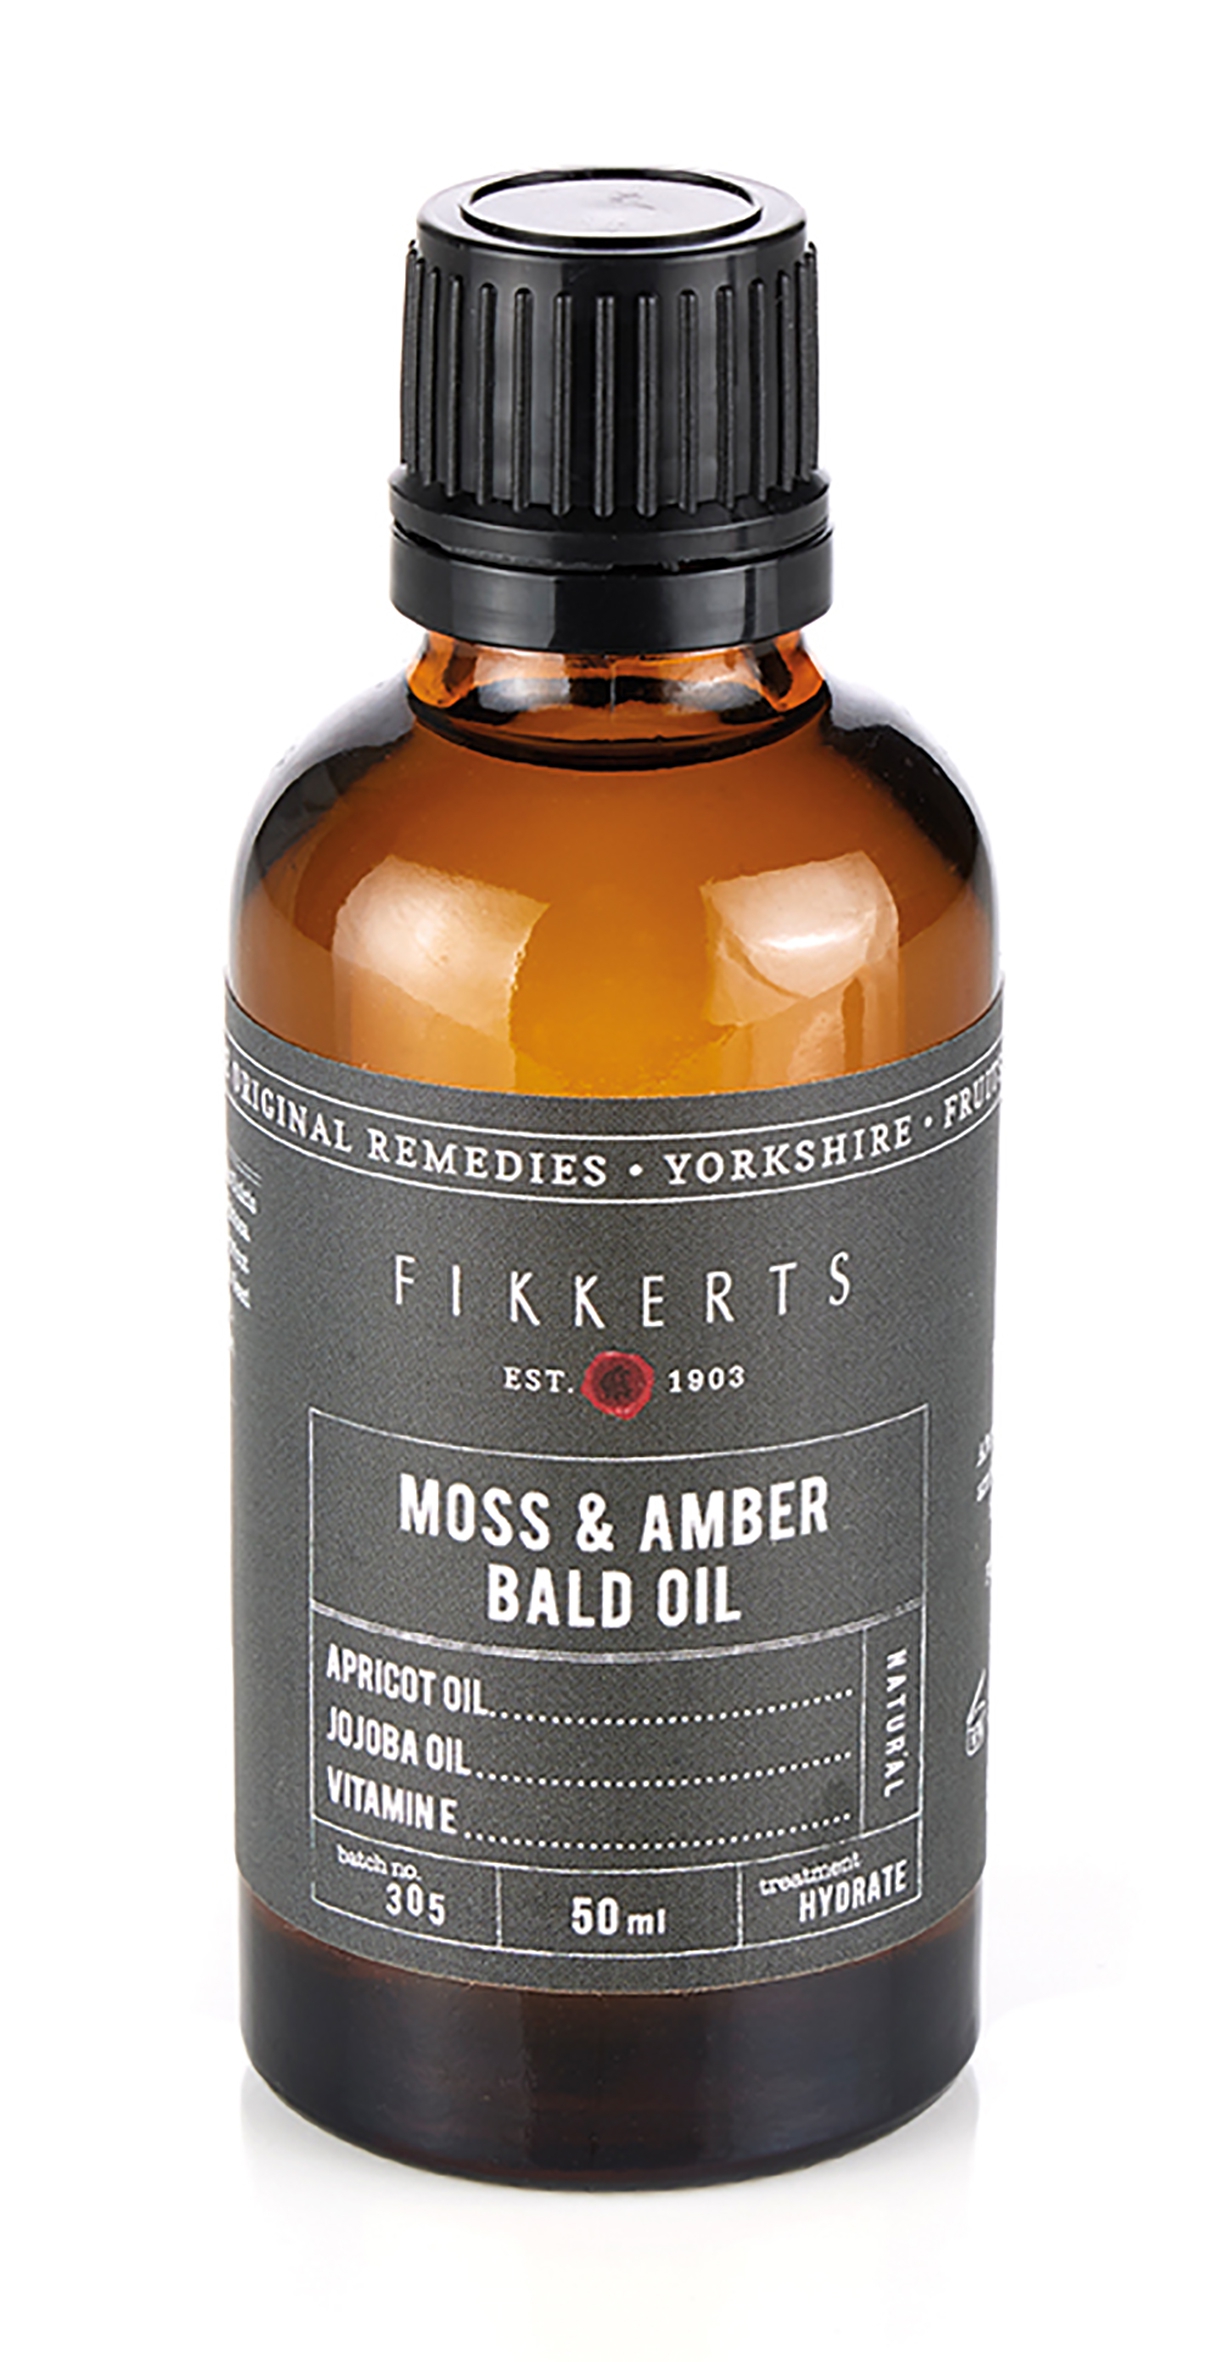 Moss & Amber Bald Oil Gentleman's